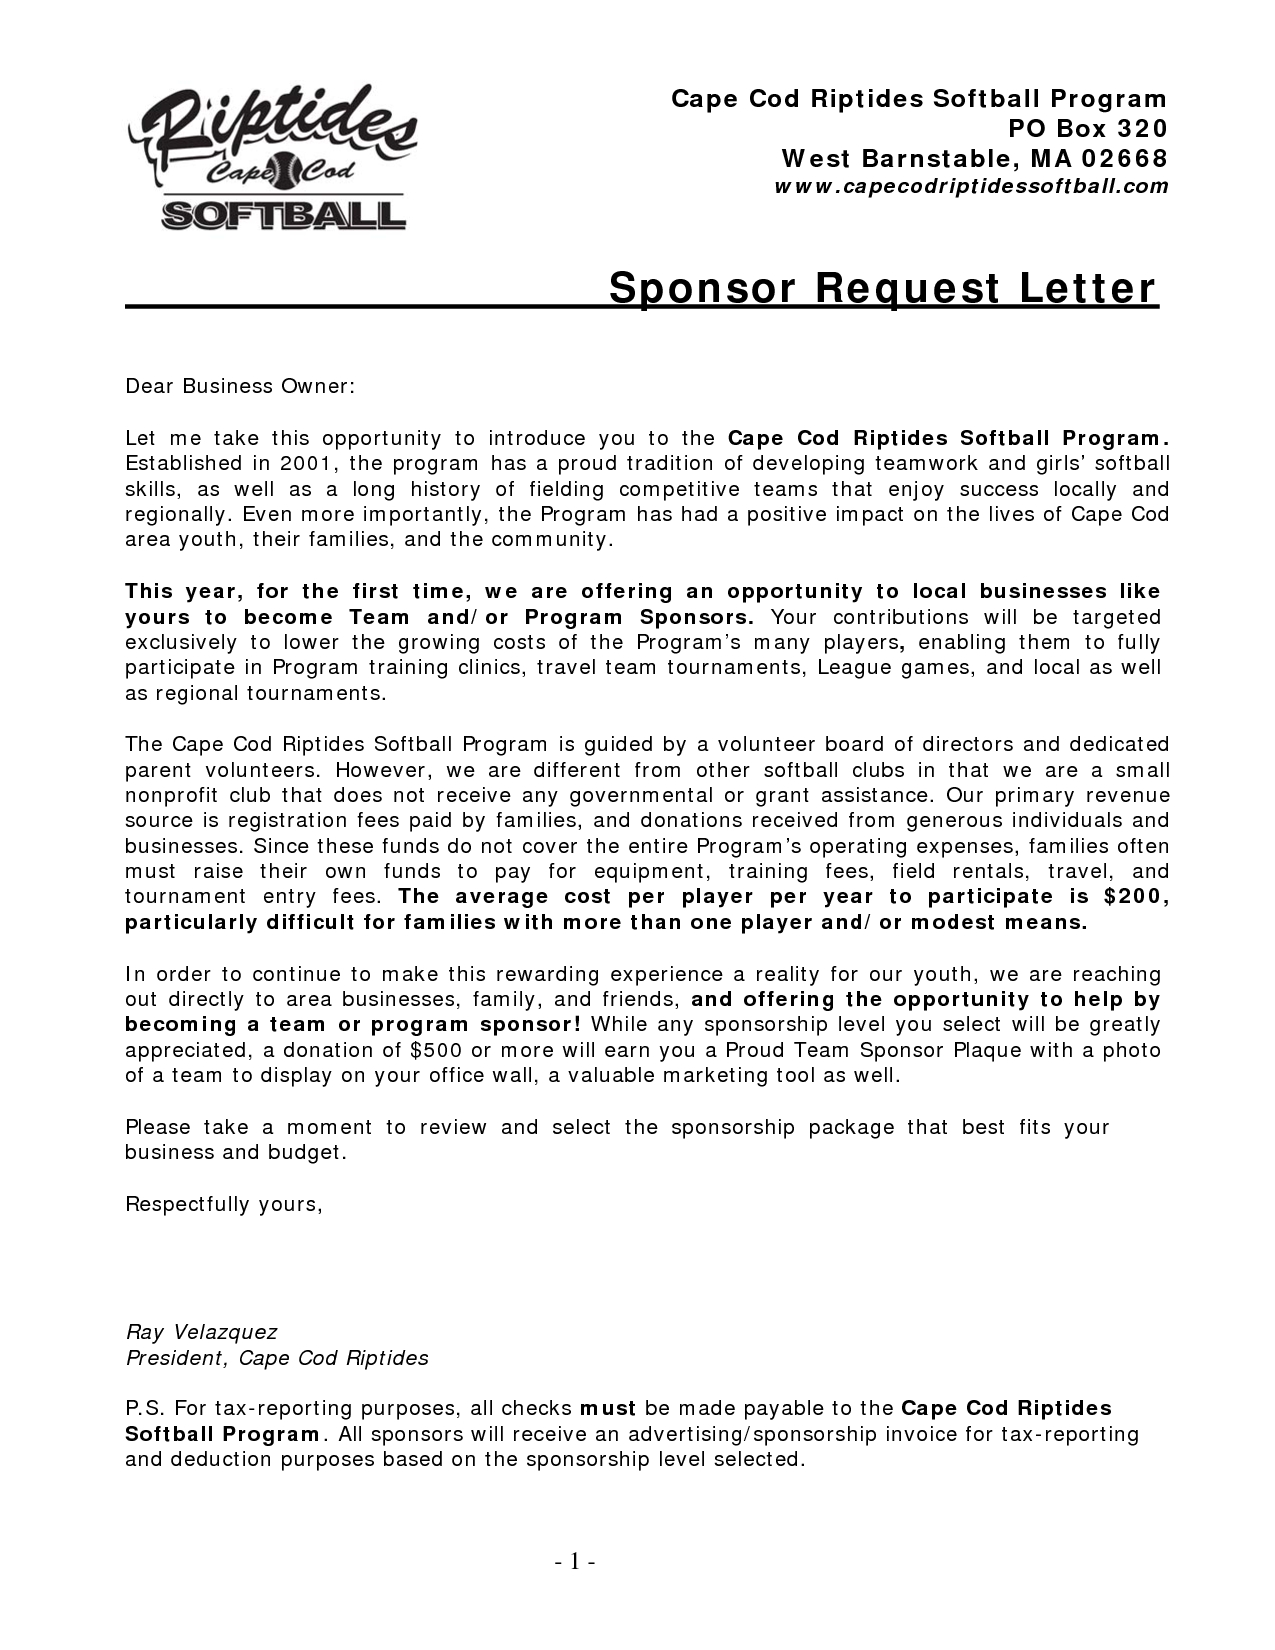 Image Result For Sample Softball Sponsor Request Letter Donation